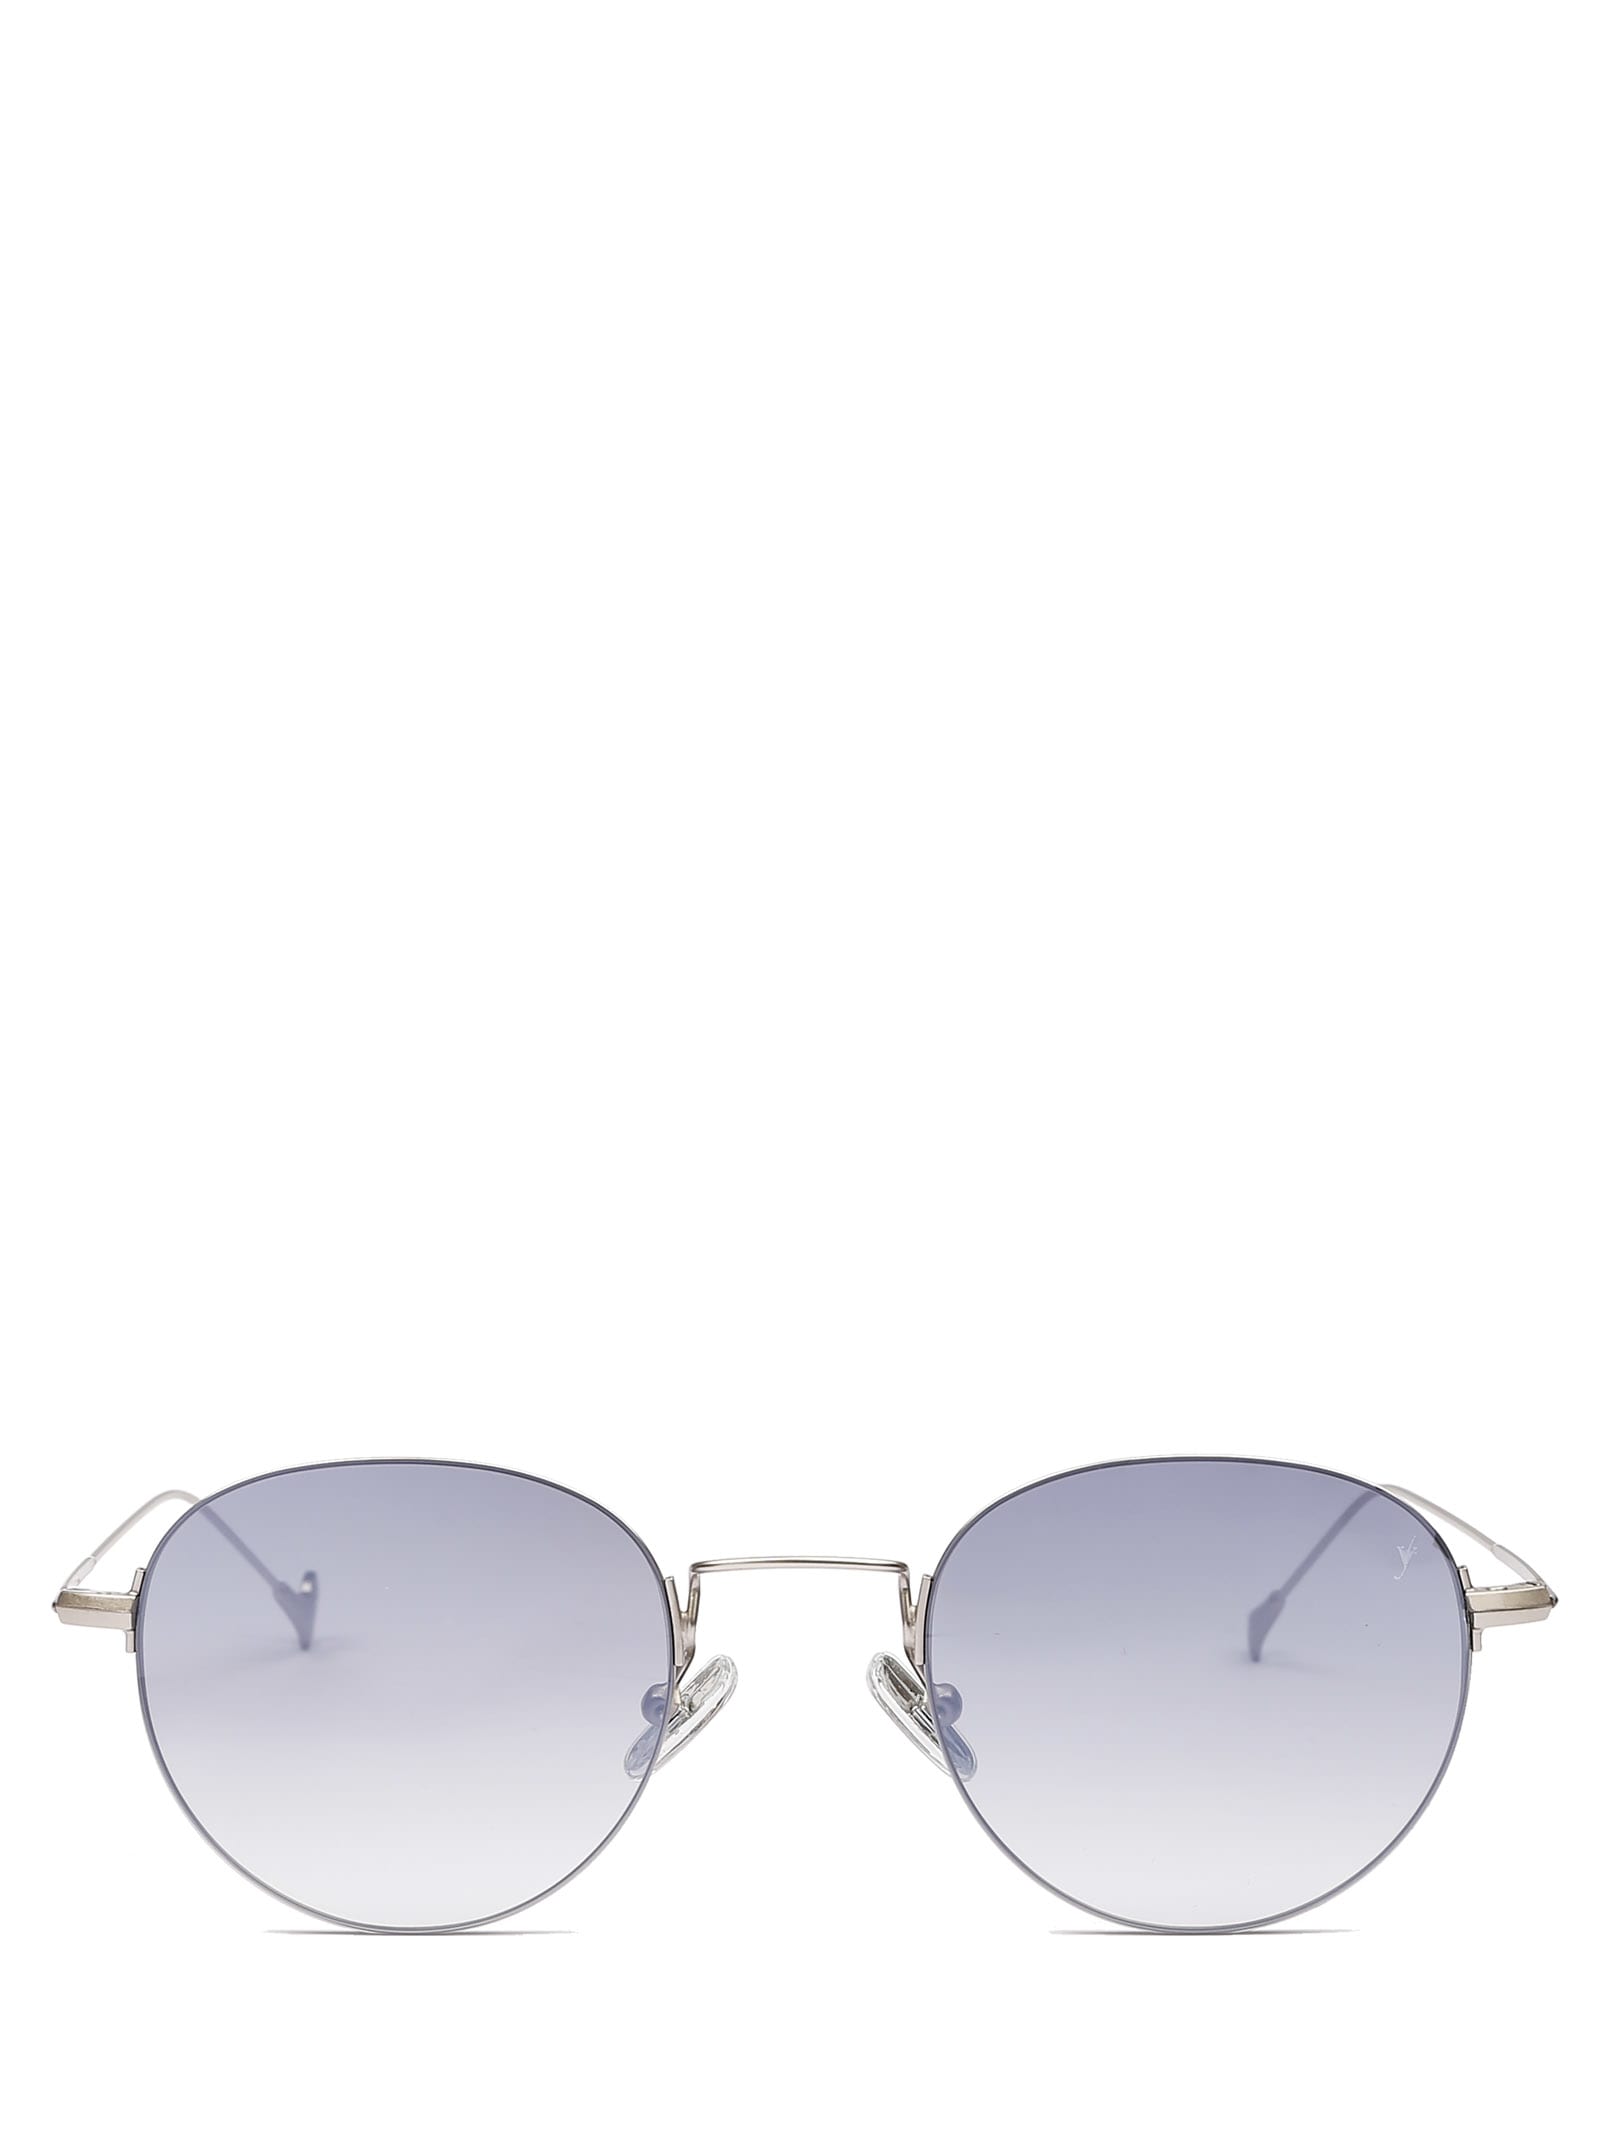 Olivier Silver Sunglasses